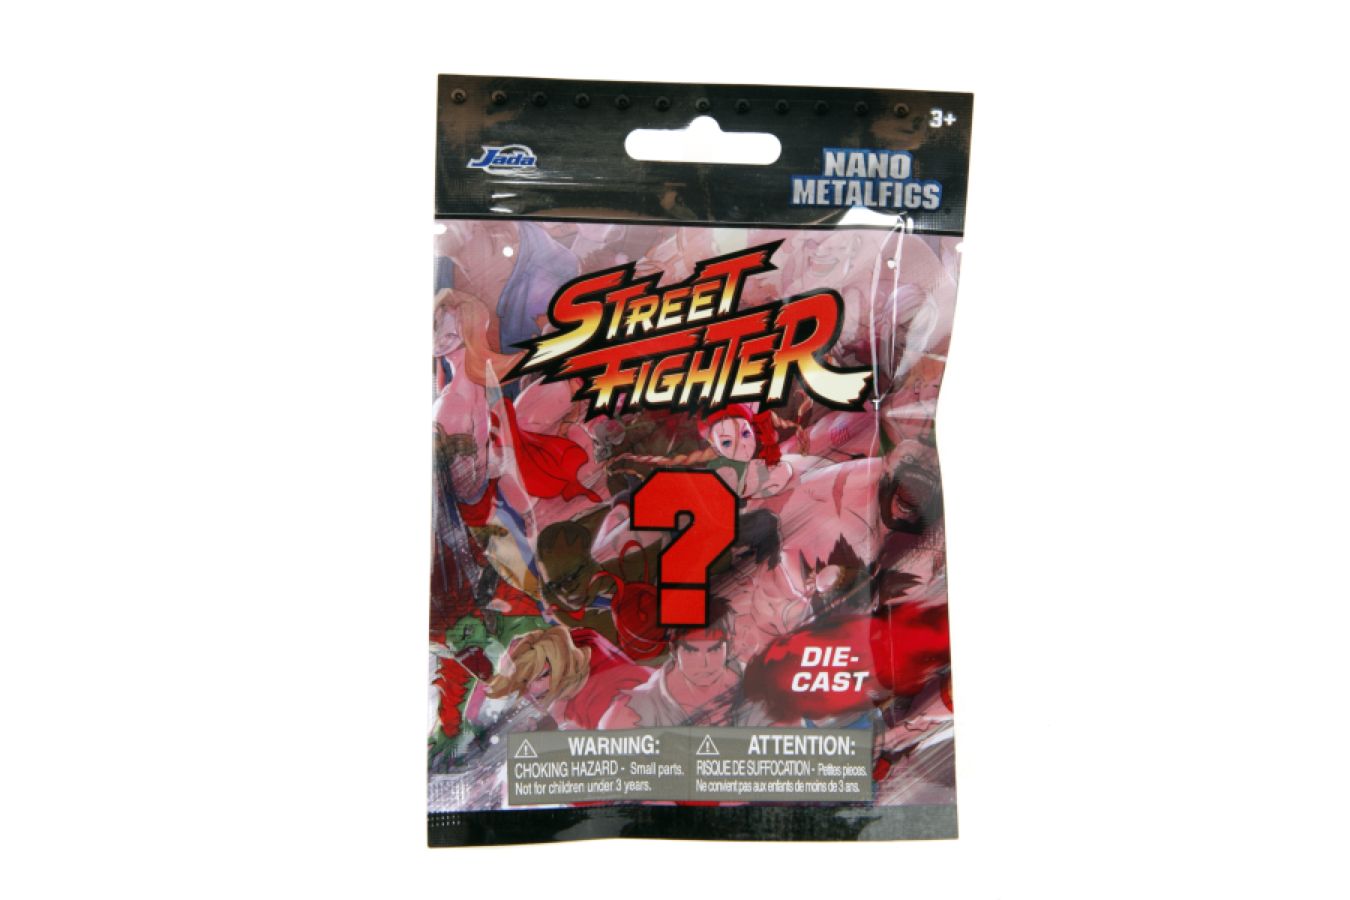 Street Fighter 2 - Nano MetalFig BlindBag (Display of 24)